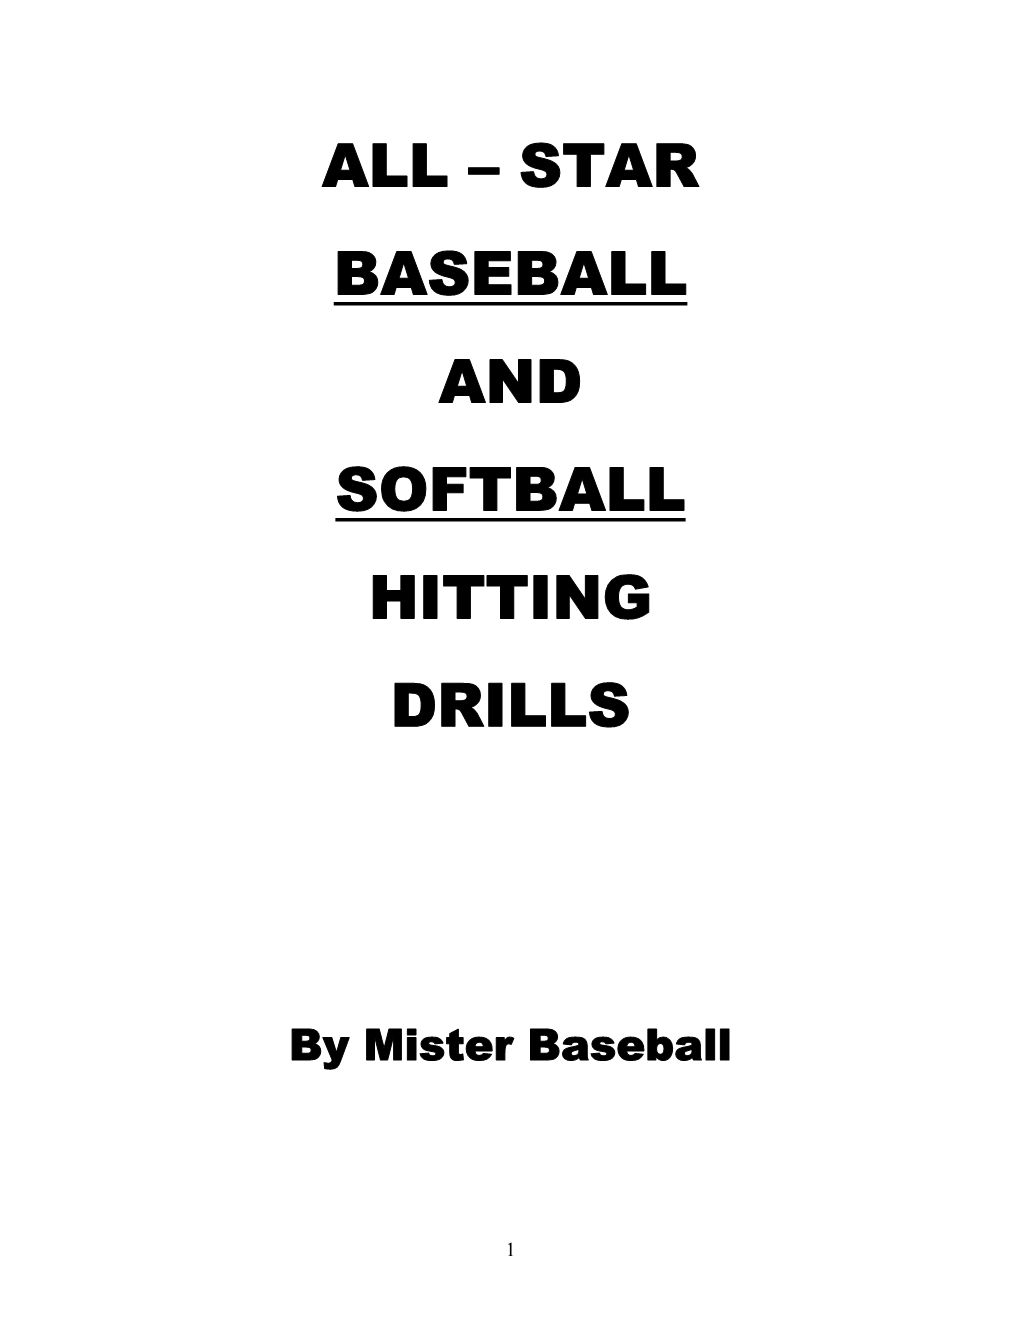 All – Star Baseball and Softball Hitting Drills